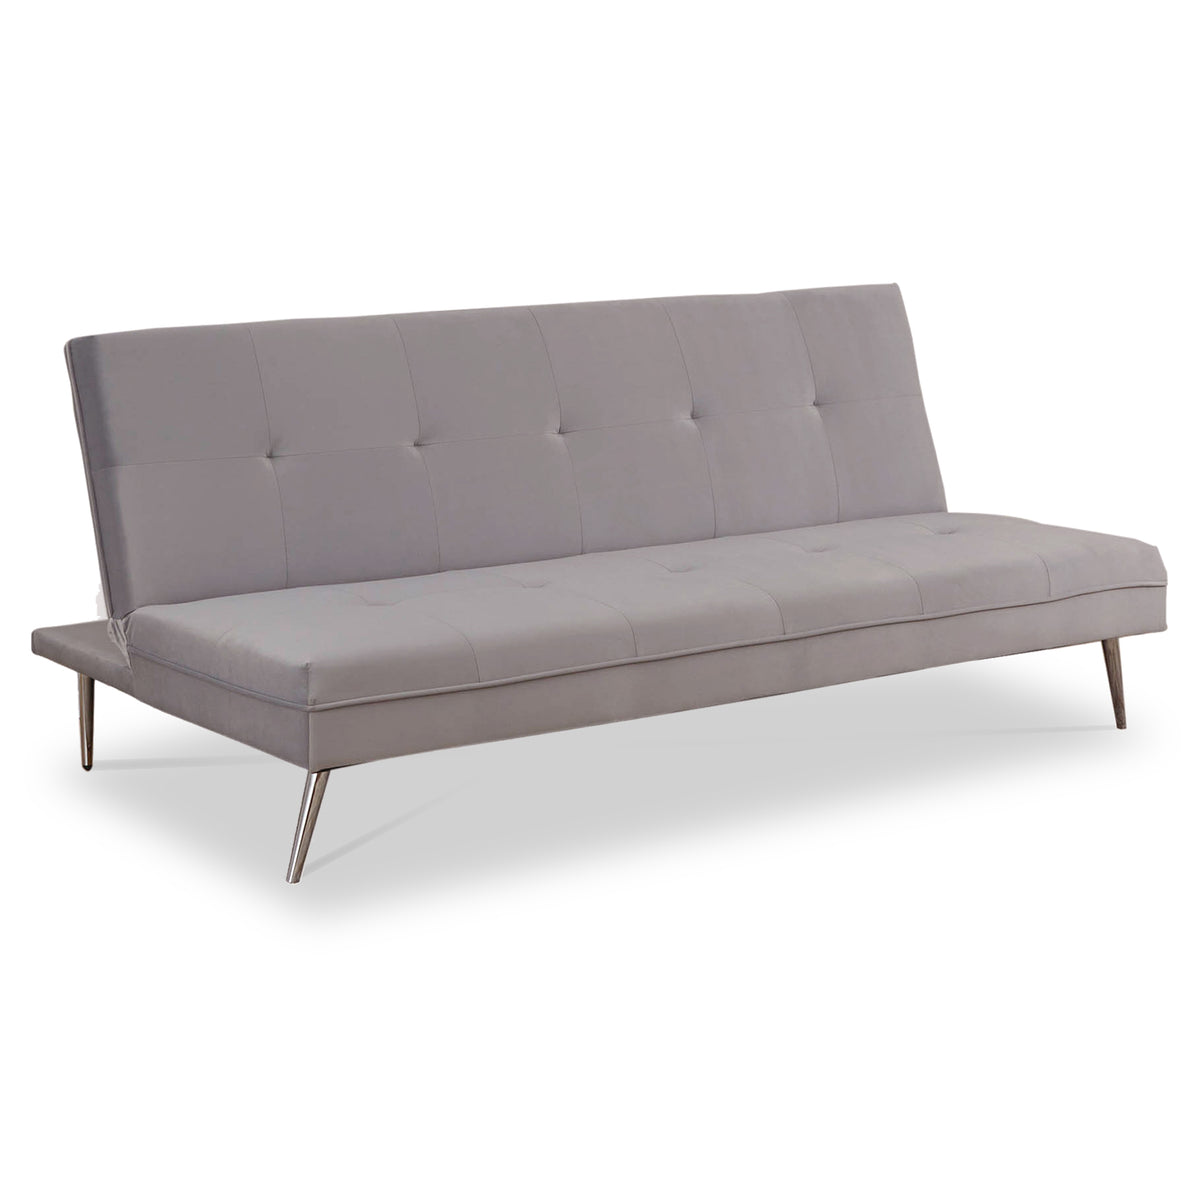 Sadie grey  velvet click clack sofa bed from Roseland Furniture